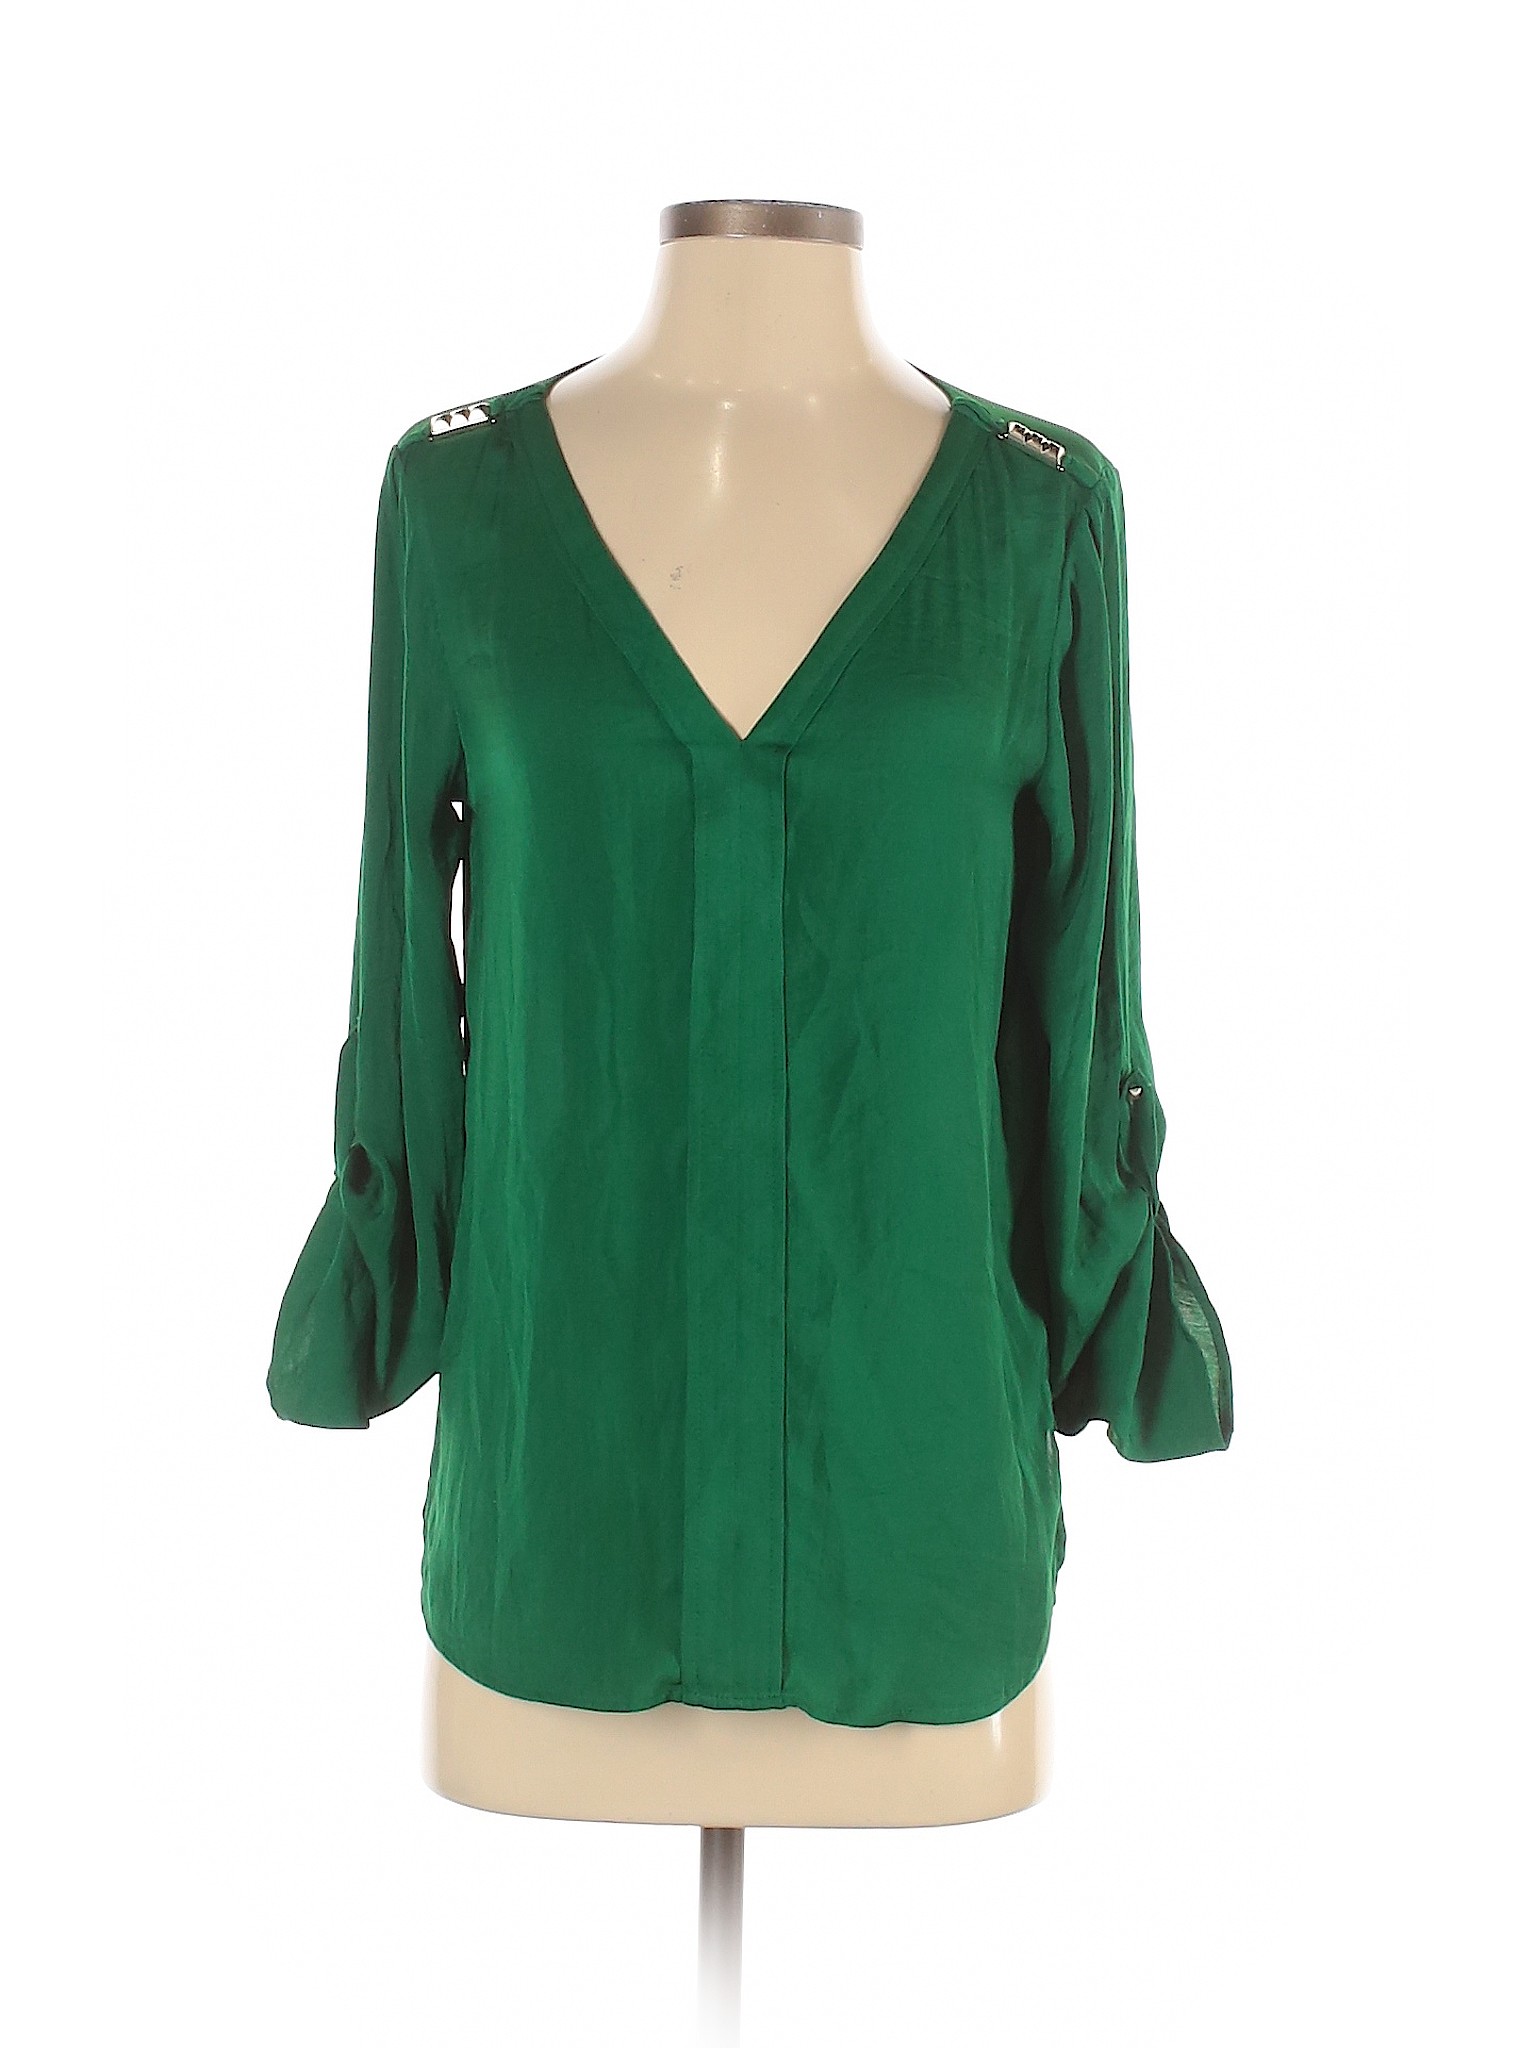 Zara Basic Women Green 3/4 Sleeve Blouse S | eBay